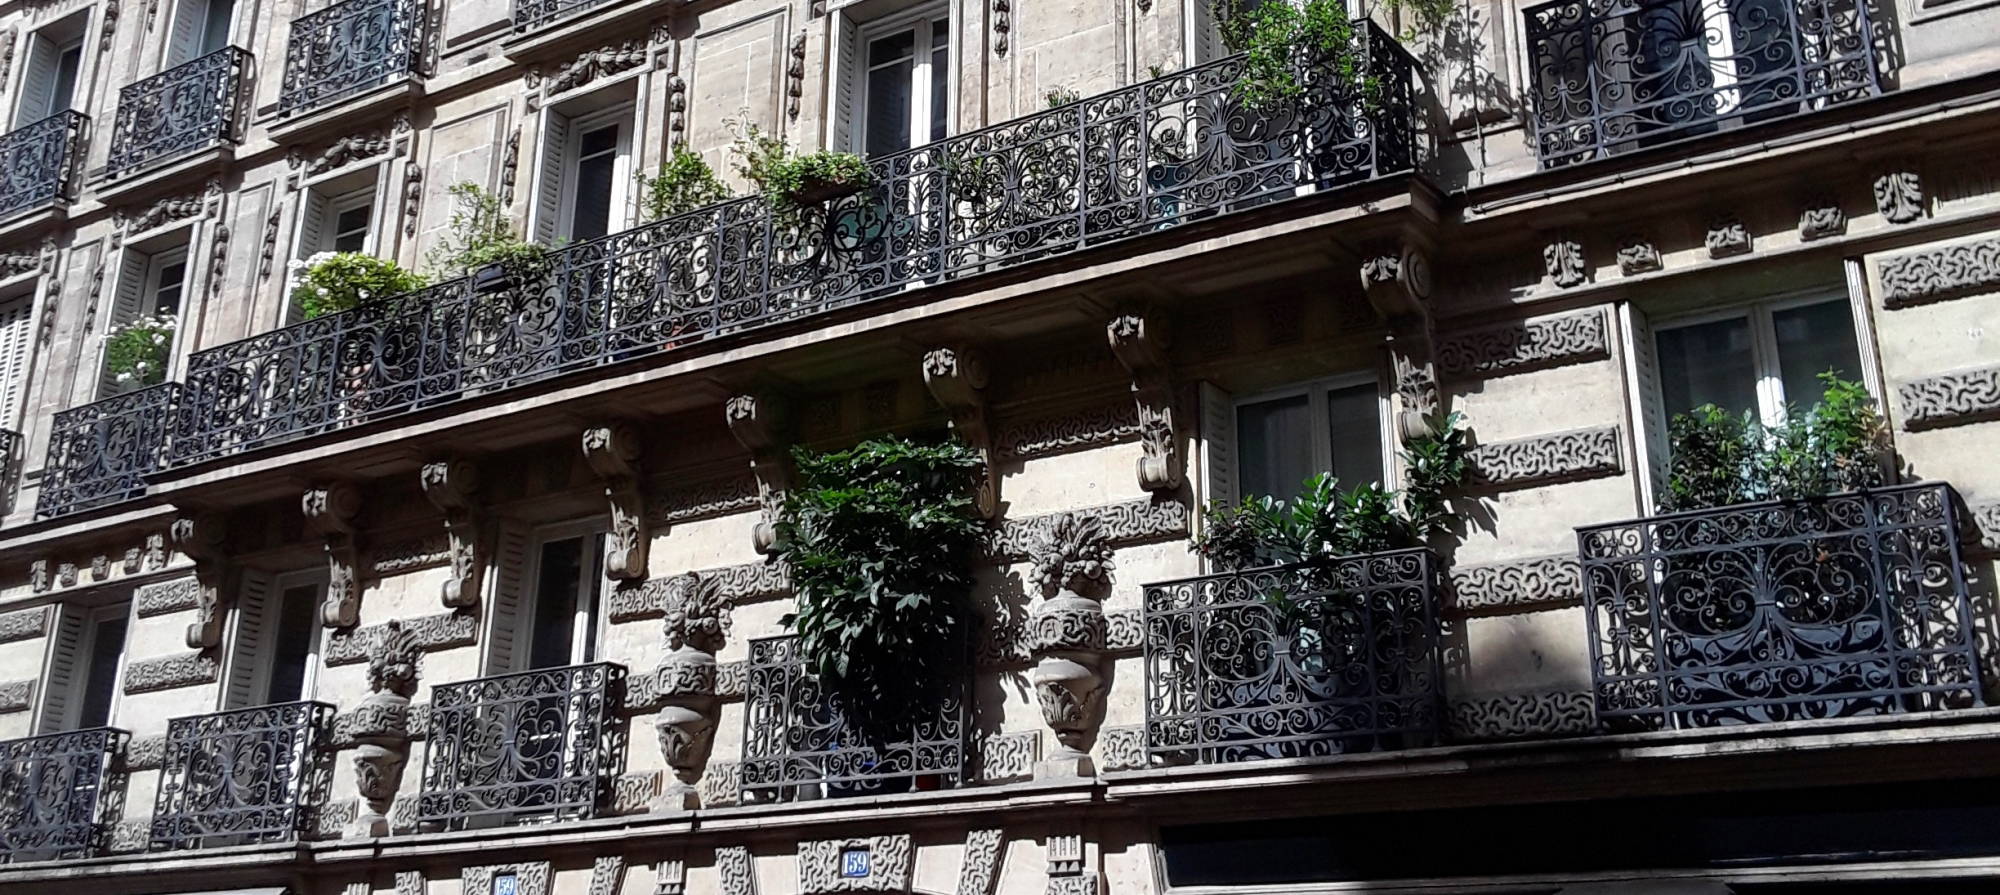 A distinctively Parisian apartment building in the 9th arrondissement.